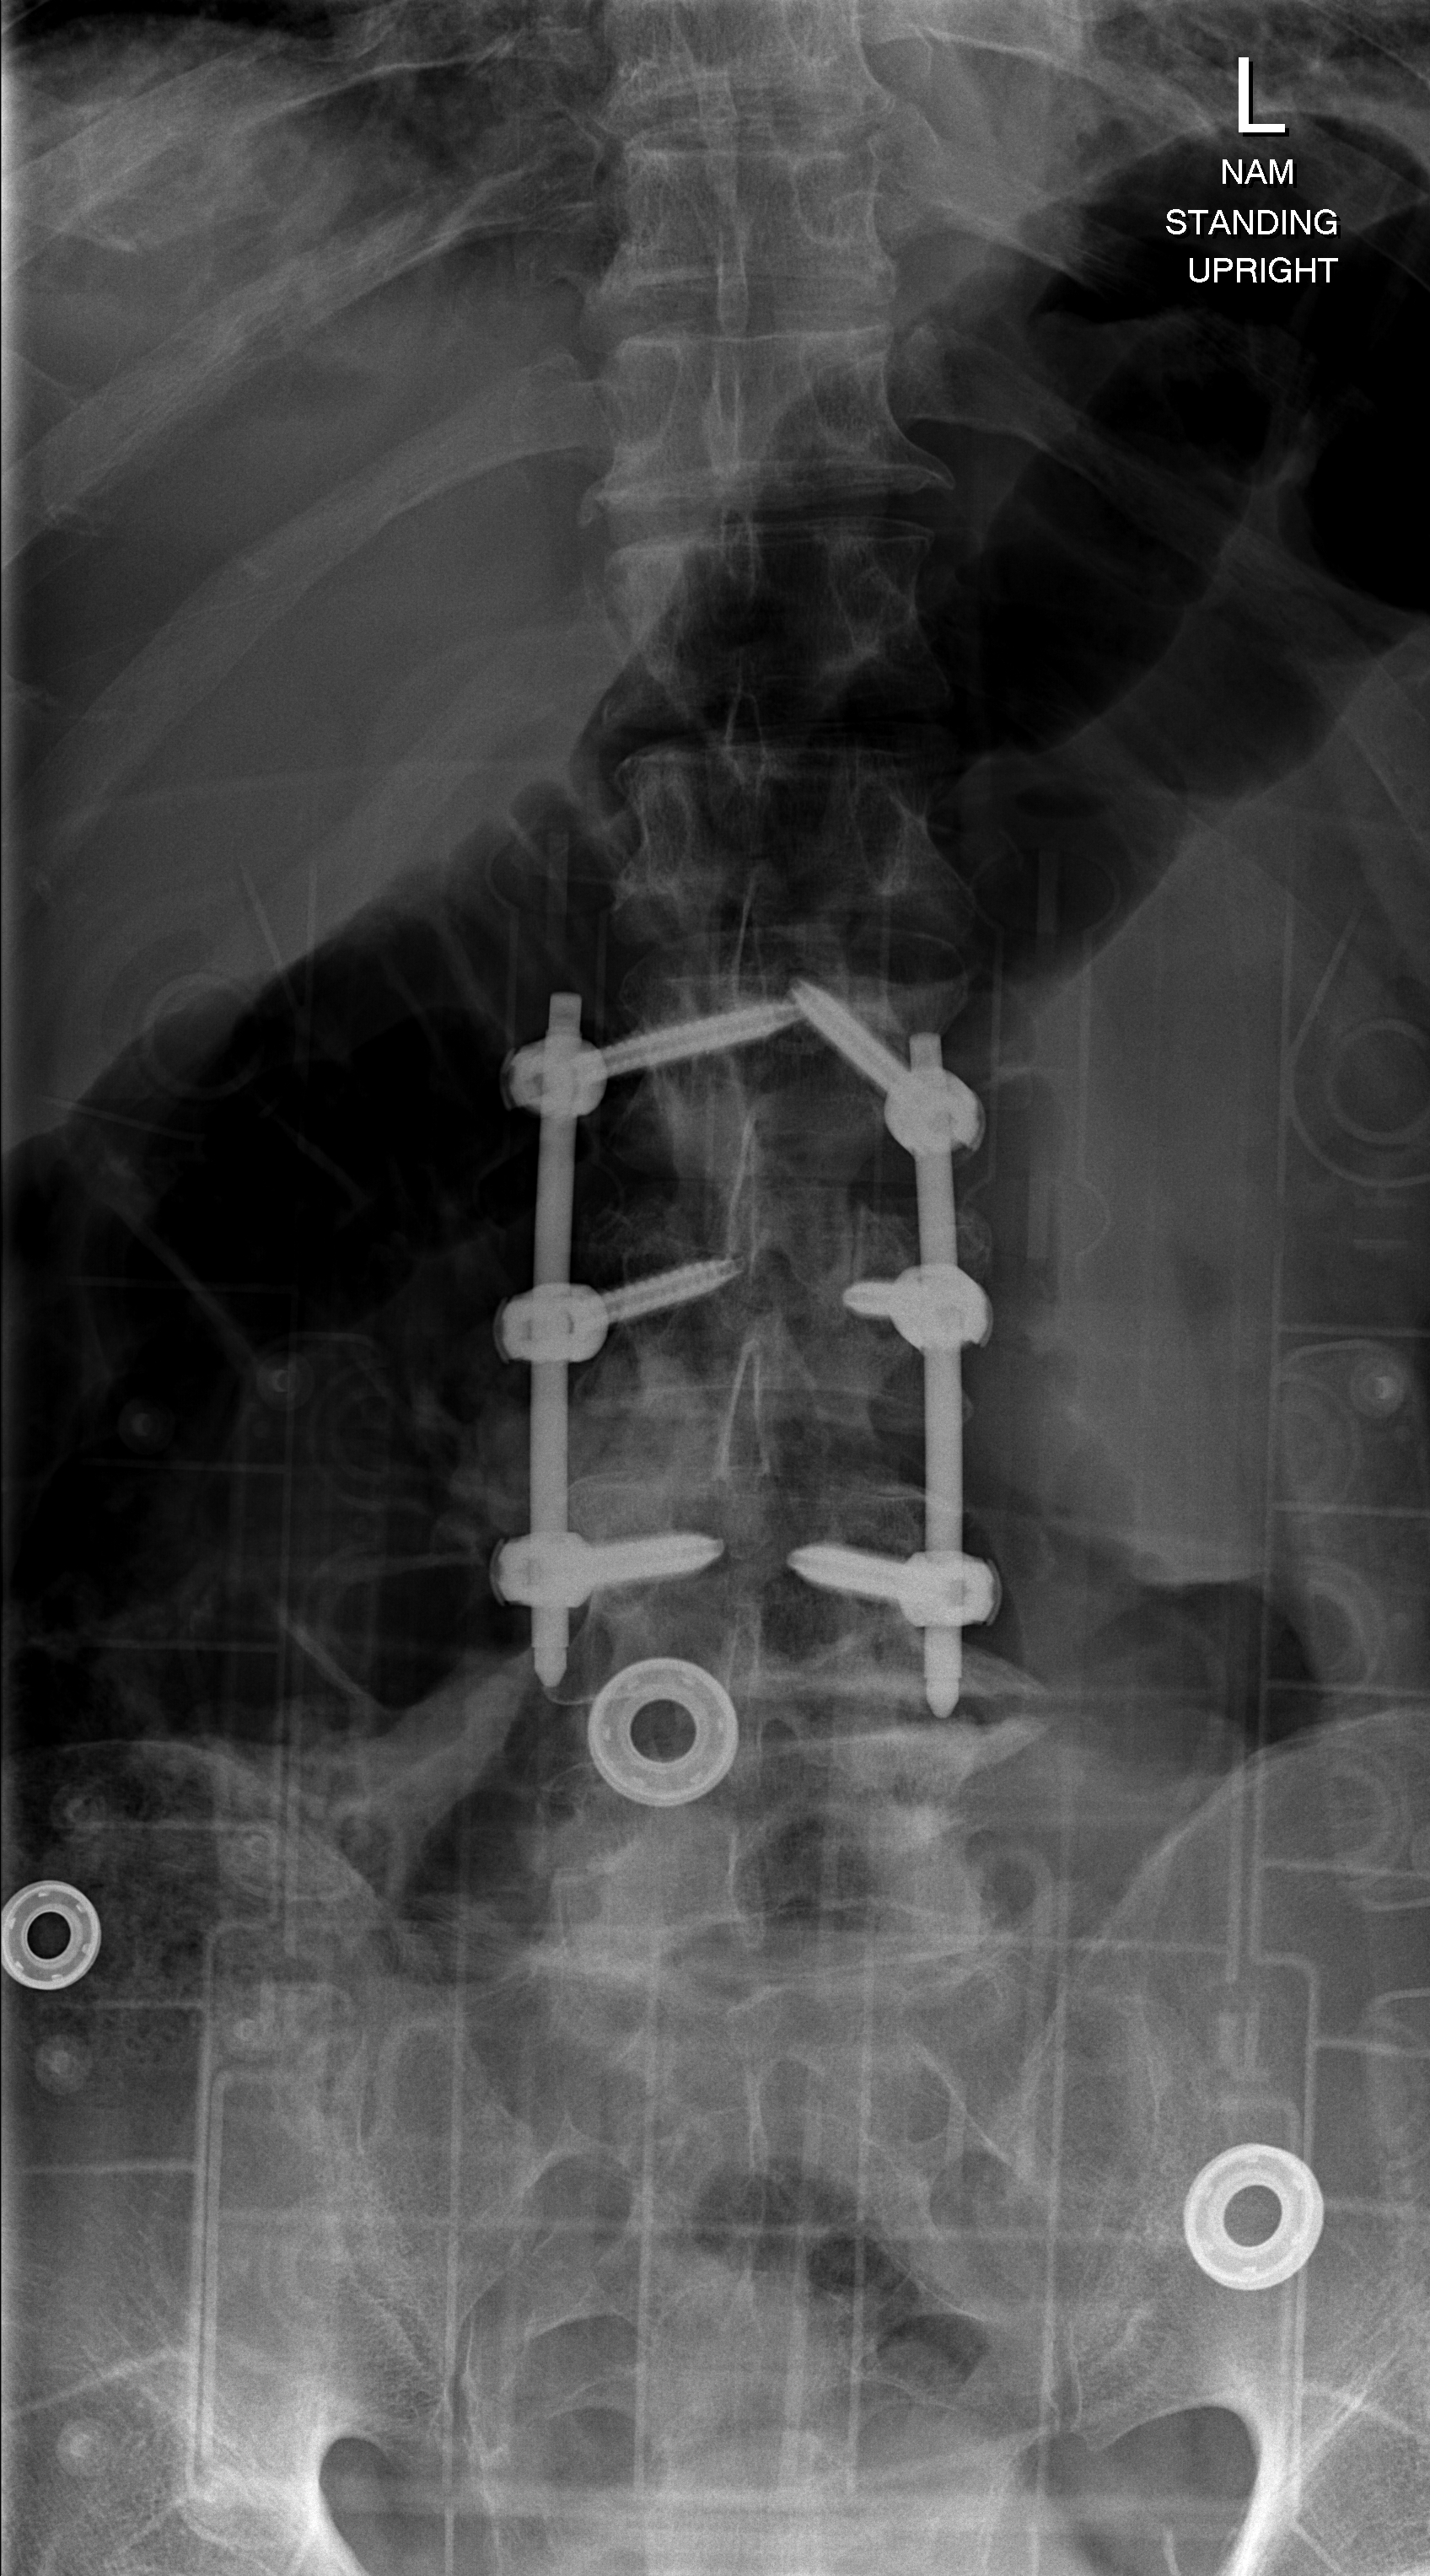 Spine Xray Image